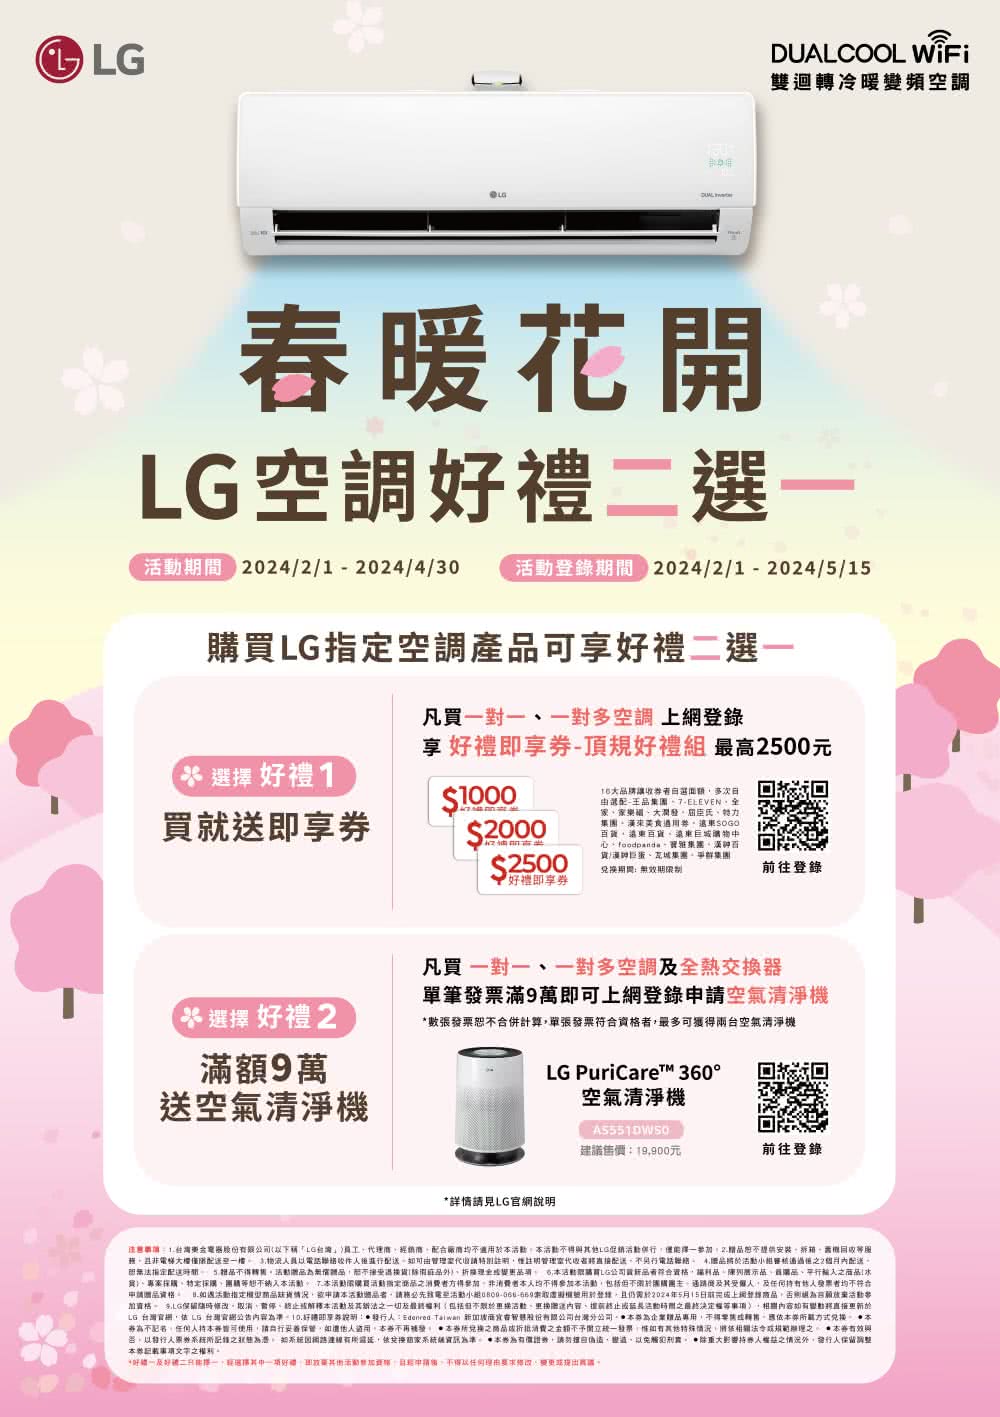 LG 樂金 4-6坪◆旗艦系列 DUALCOOL WiFi 